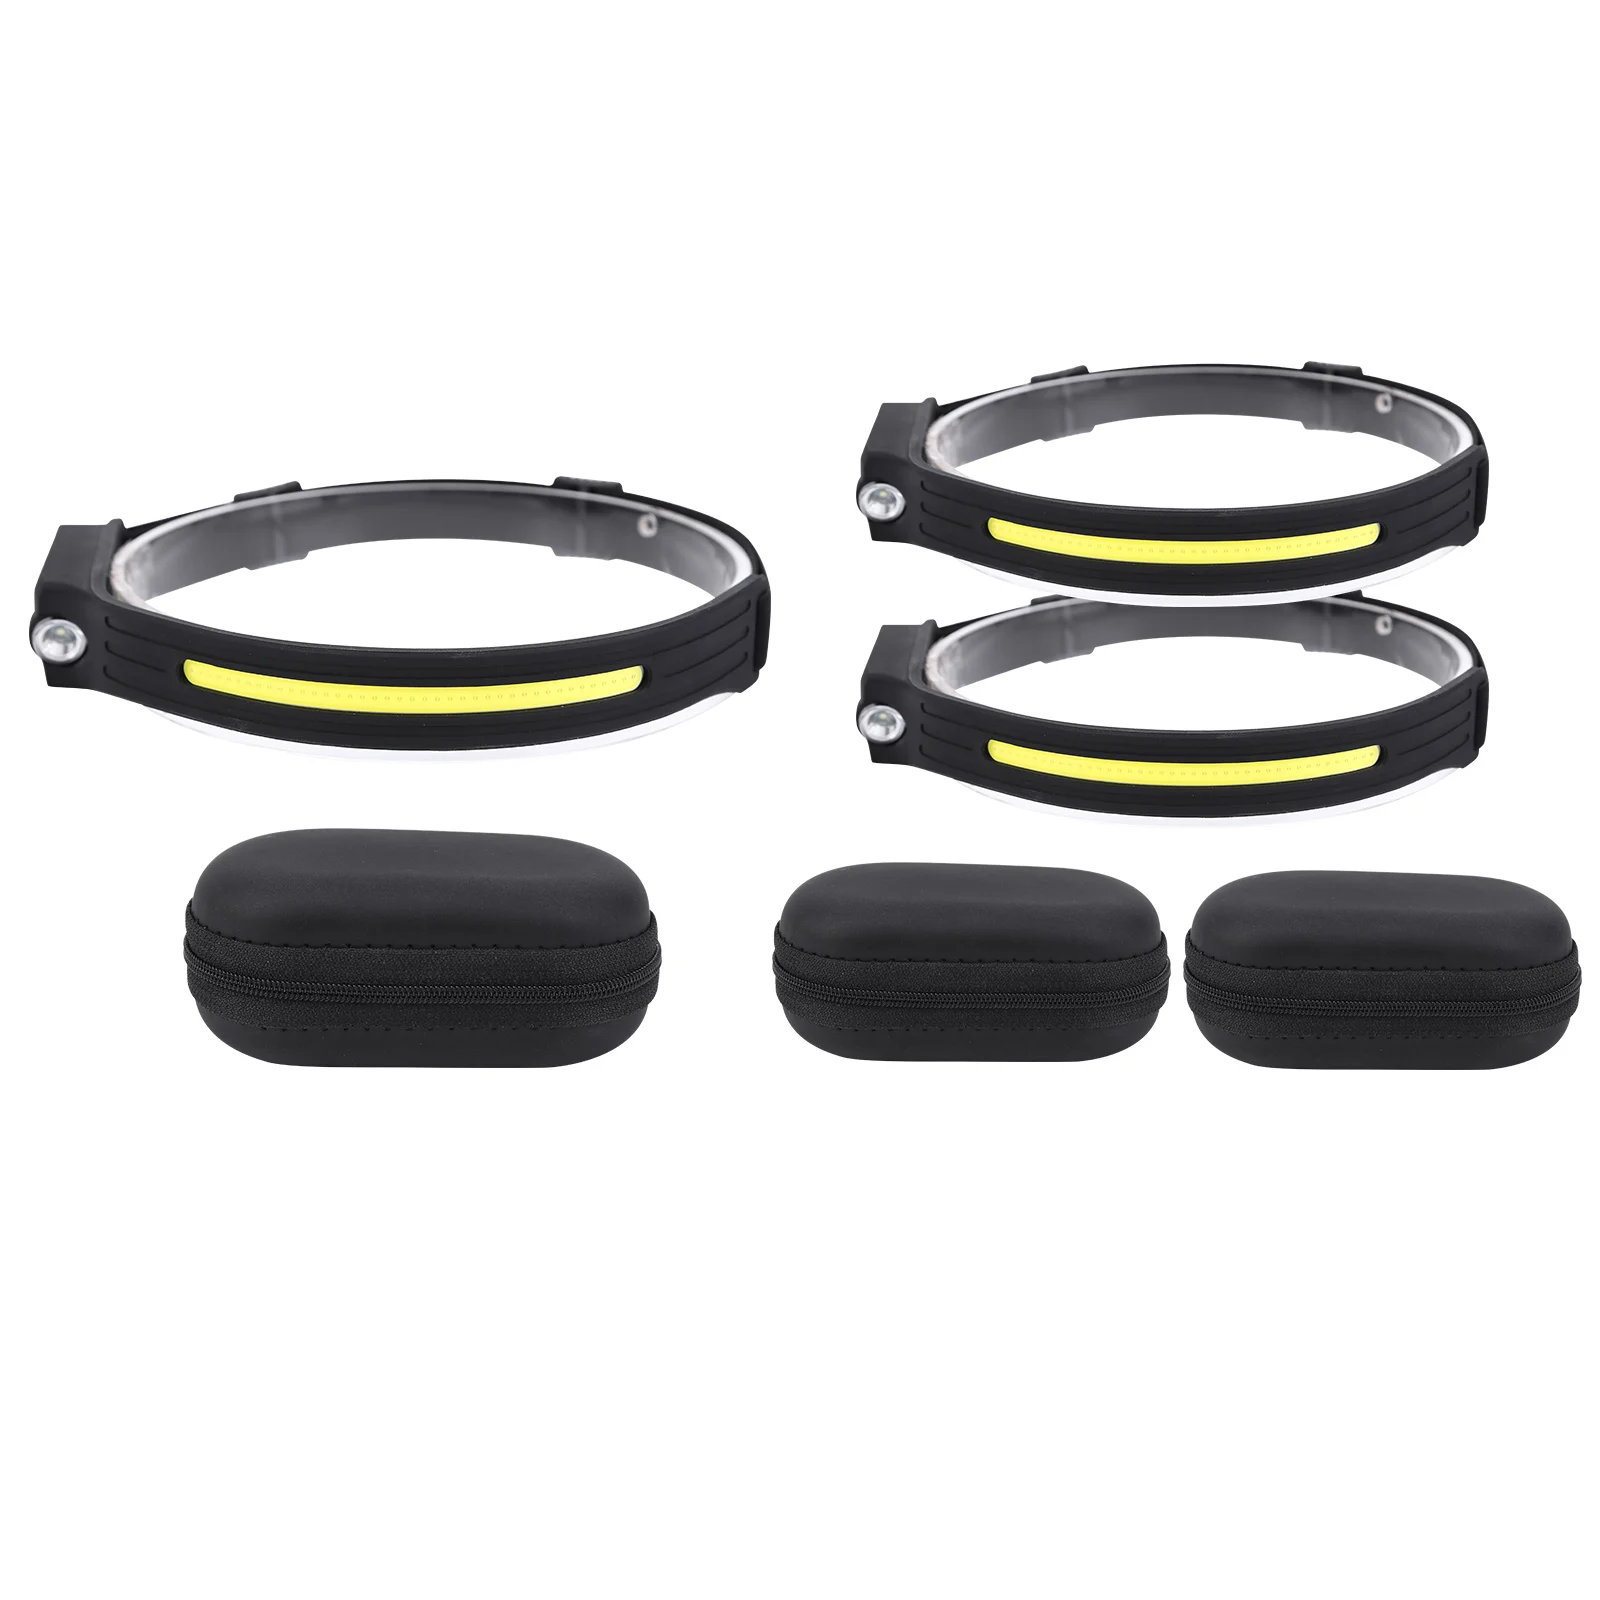 

ABS LED Headlamp 4 Gears Adjustable Flashlight Waterproof COB + XPE LED Headlight for Running Camping Hiking Tool